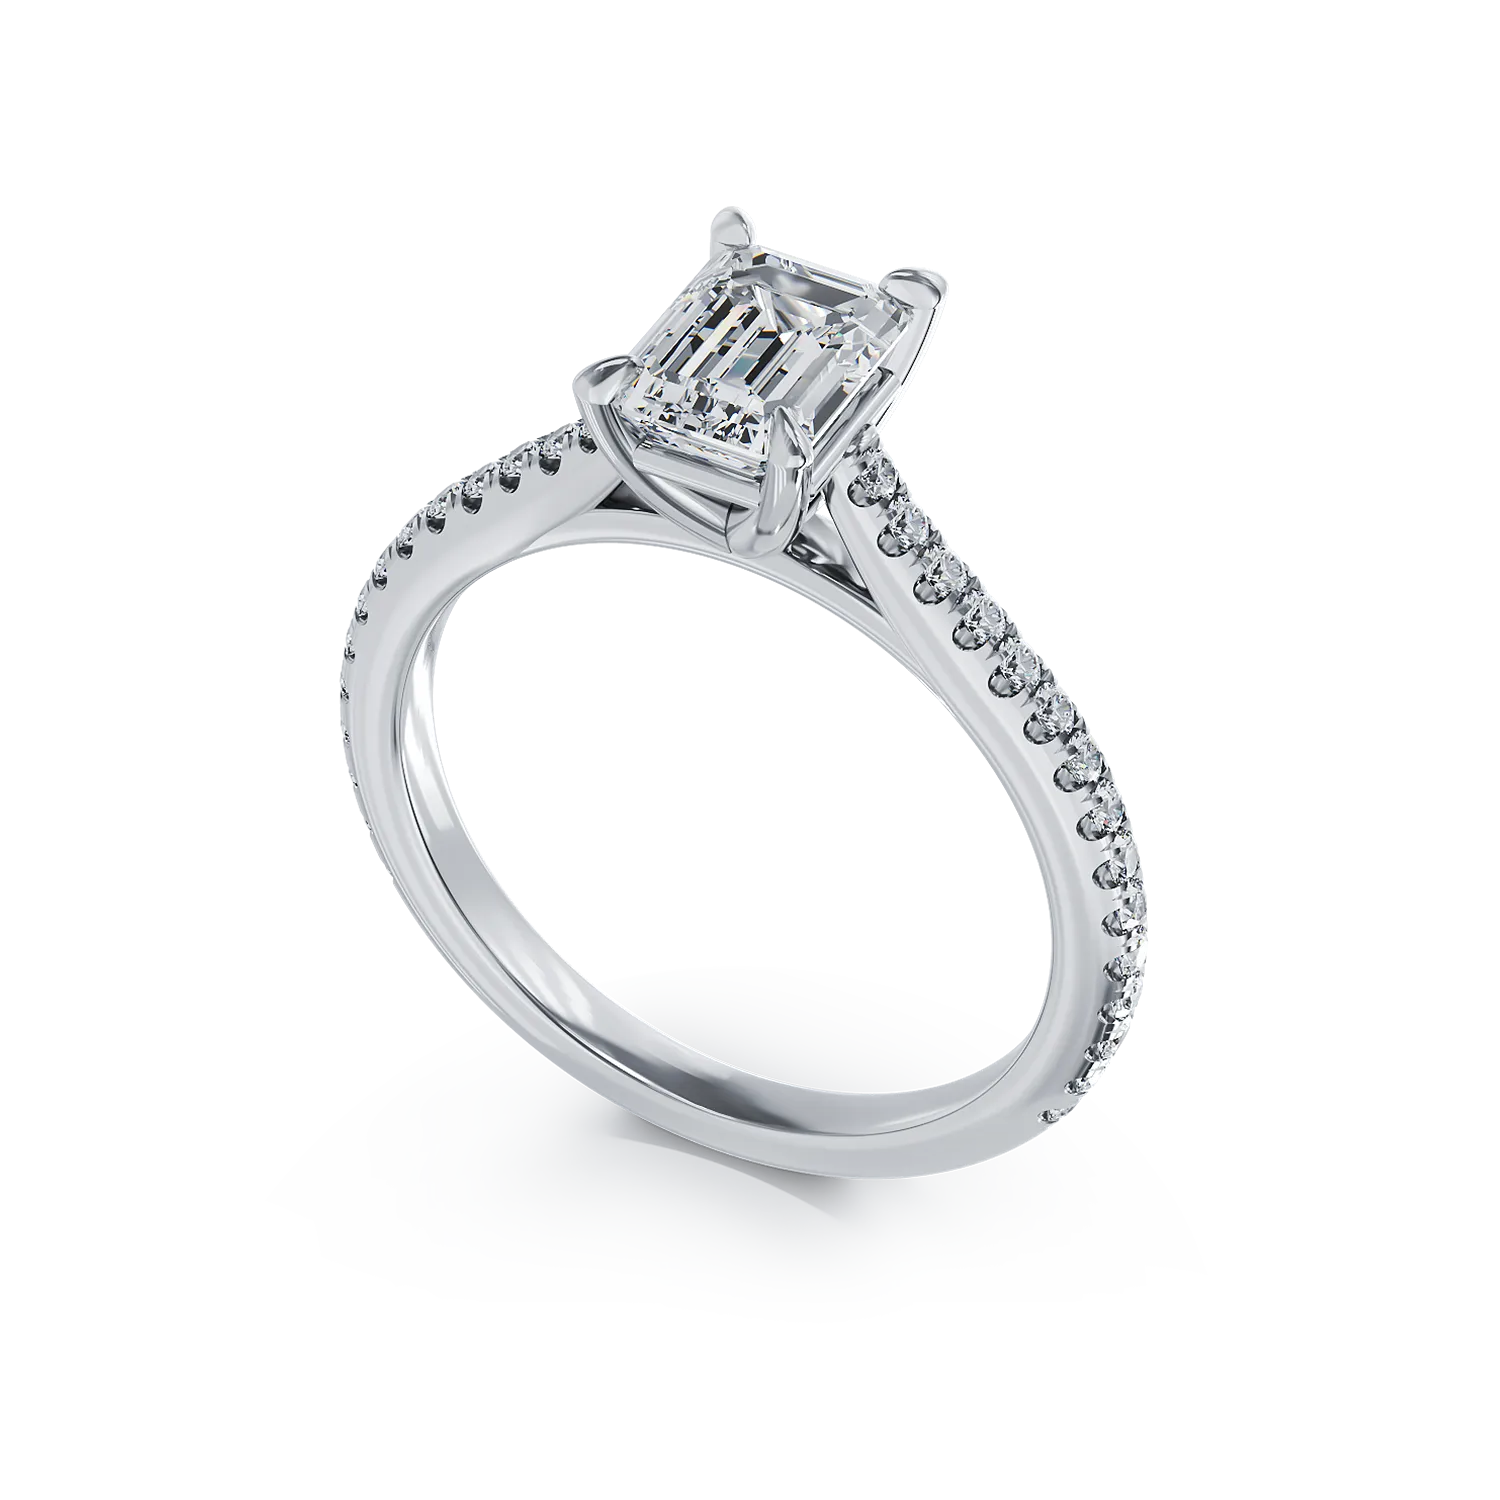 Diamond platinum engagement ring with 1ct diamond and 0.223ct diamonds